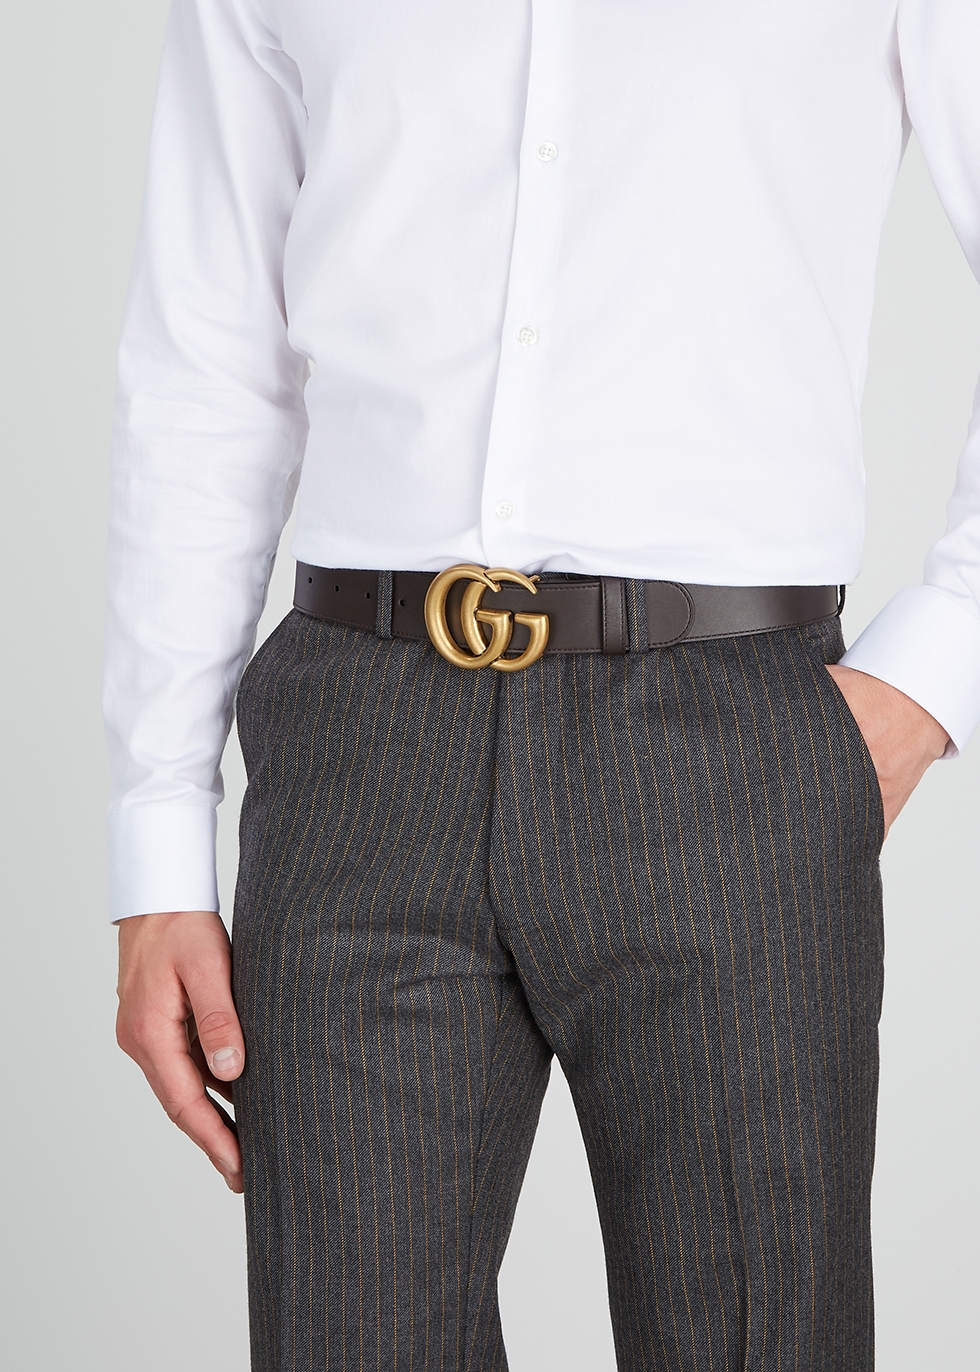 gucci belt with suit